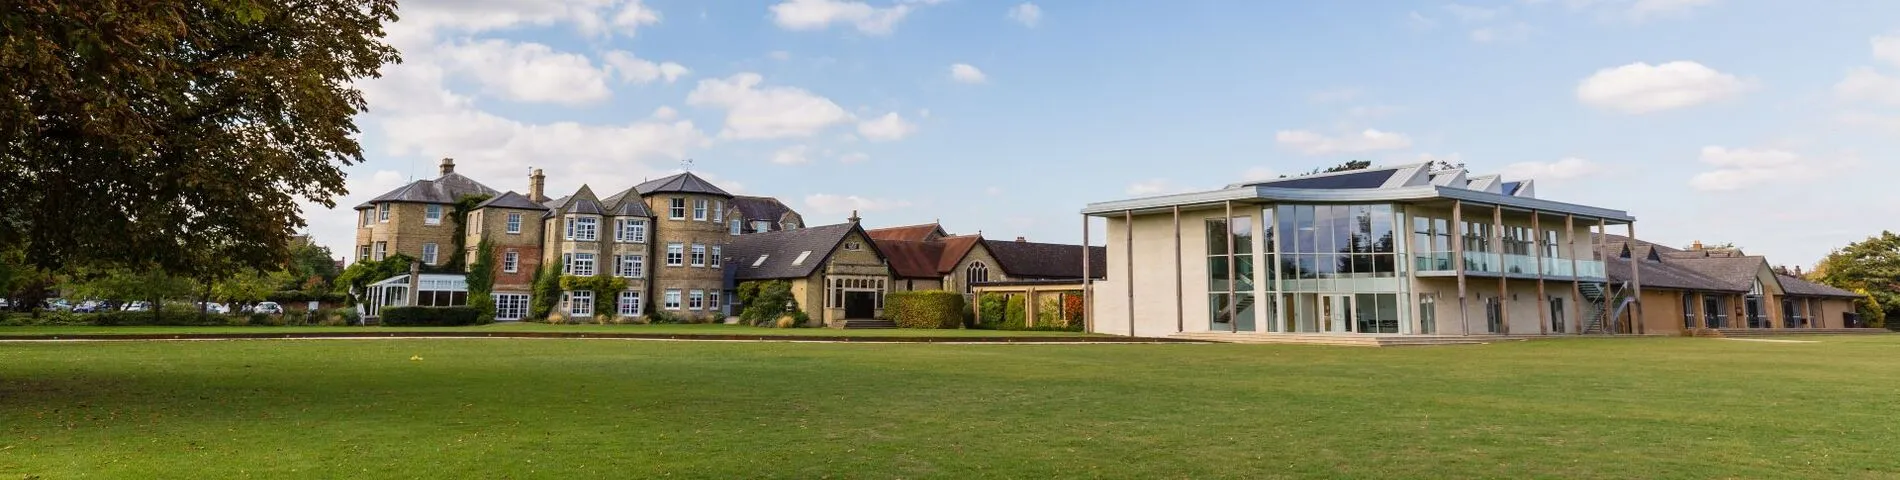 Imatge 1 de l'escola Oxford Spires Junior Centre - Summer Fields School